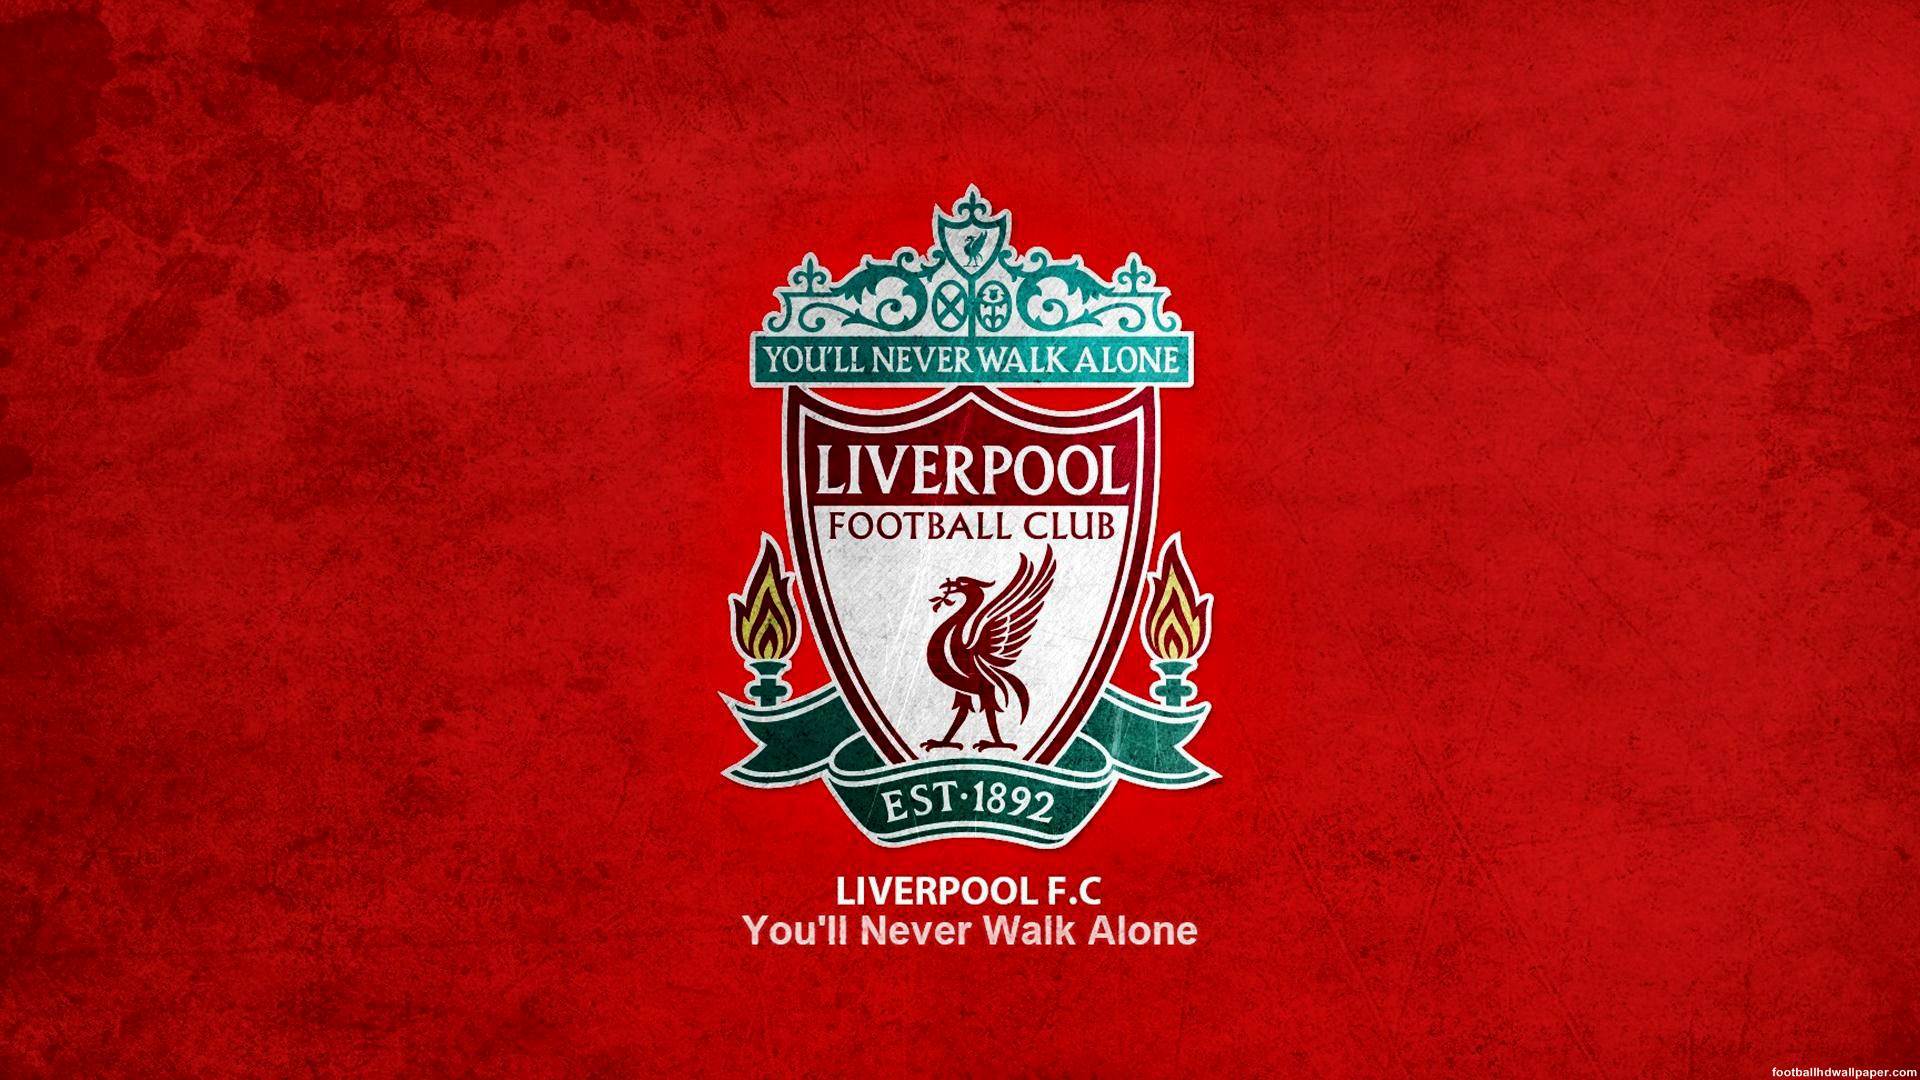 Liverpool FC twitter